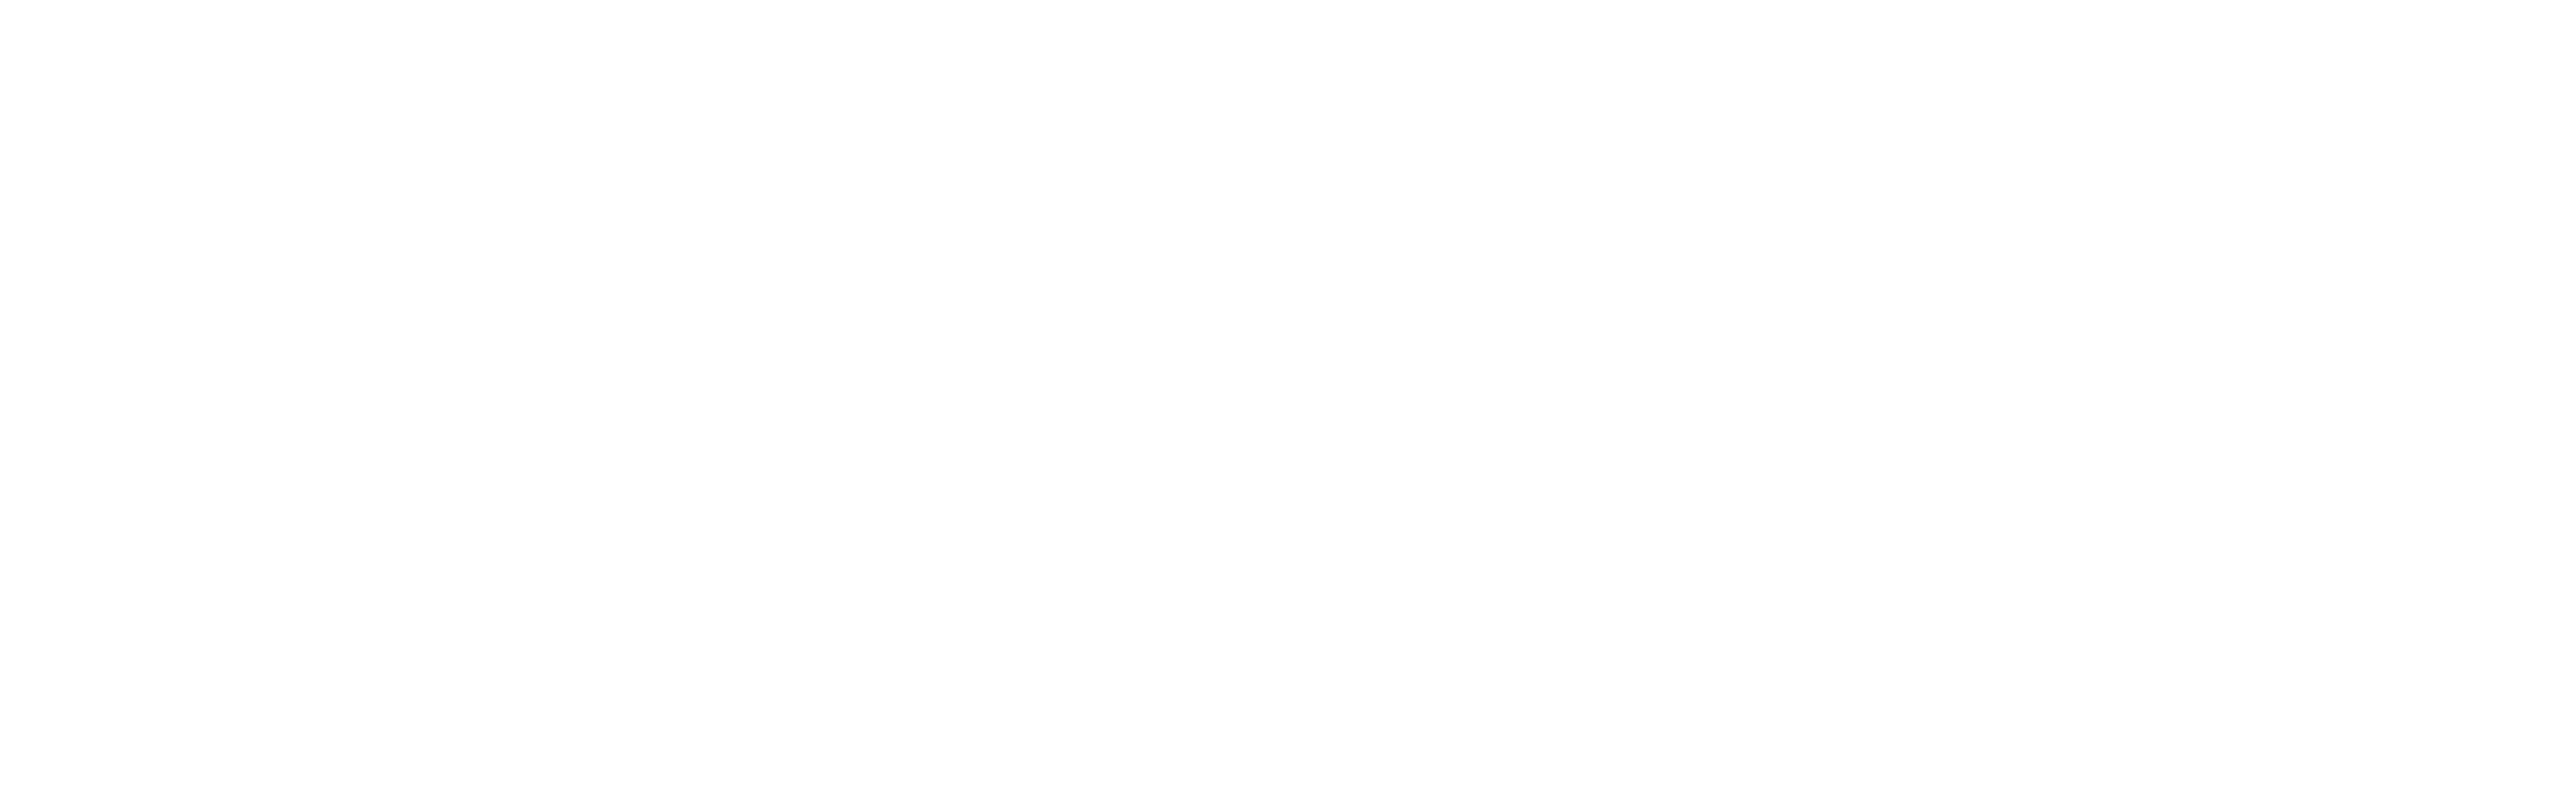 London-International-Media